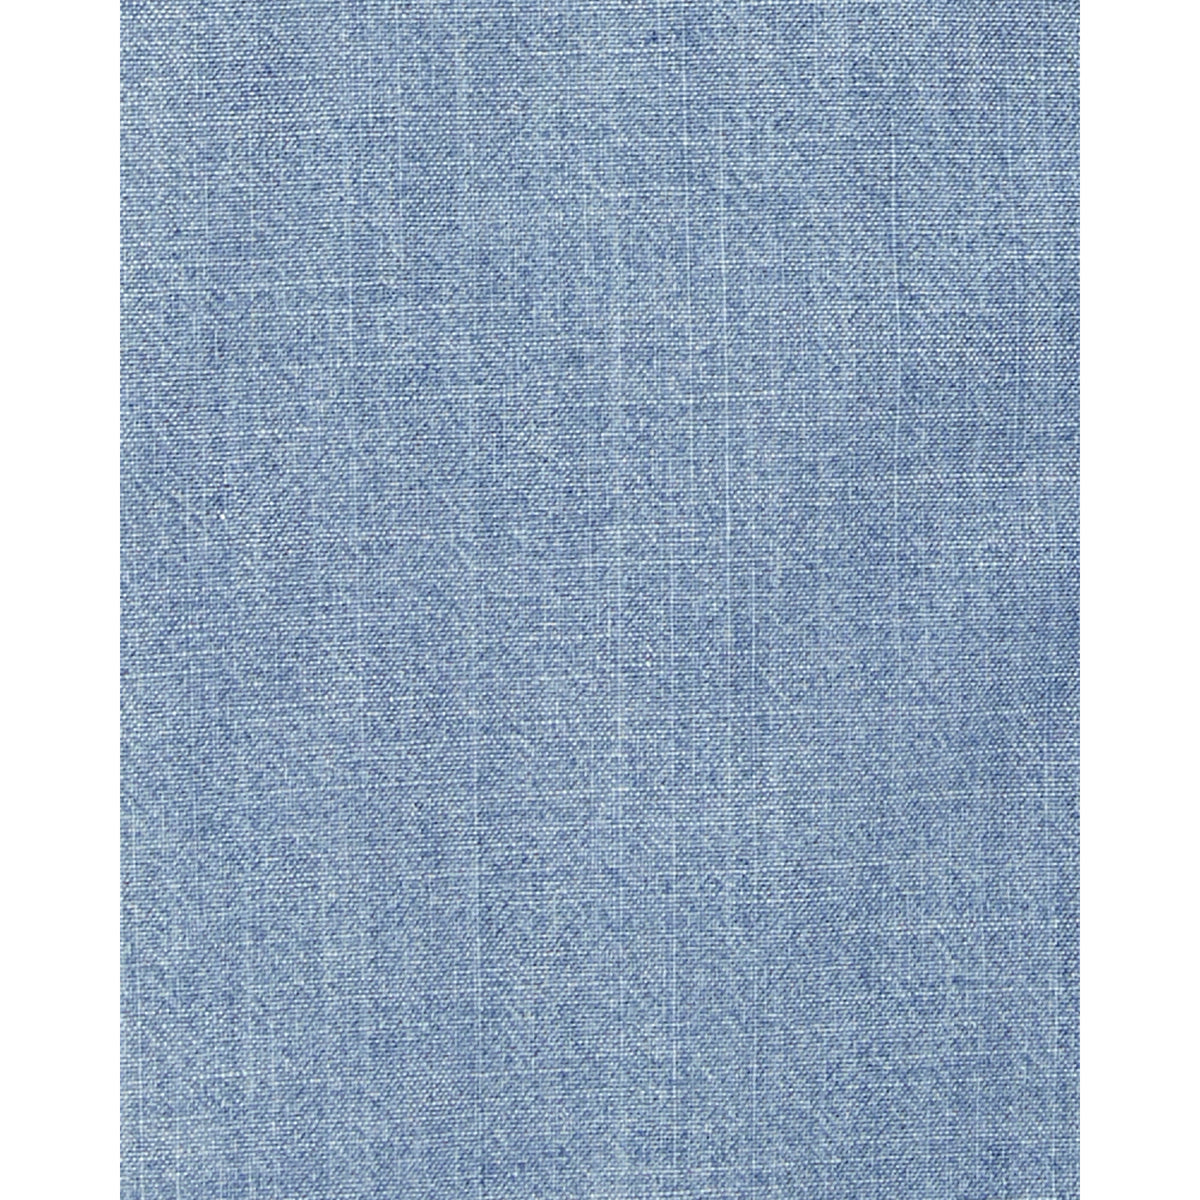 OshKosh 休閒風藍色襯衫(2T-5T)